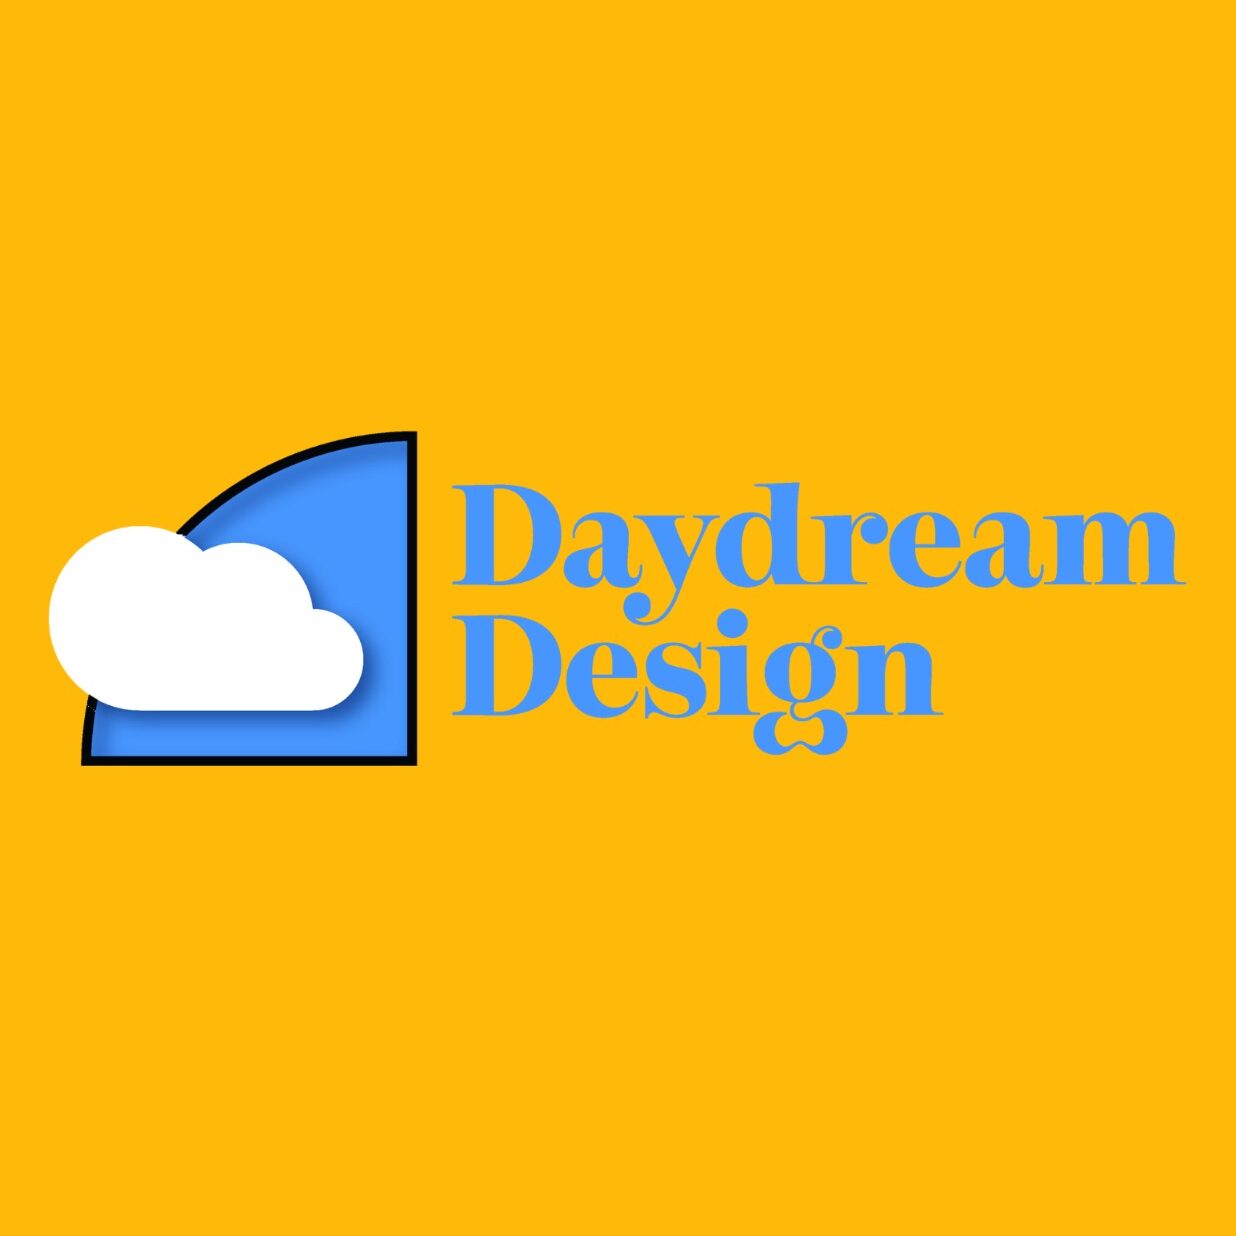 Daydream design